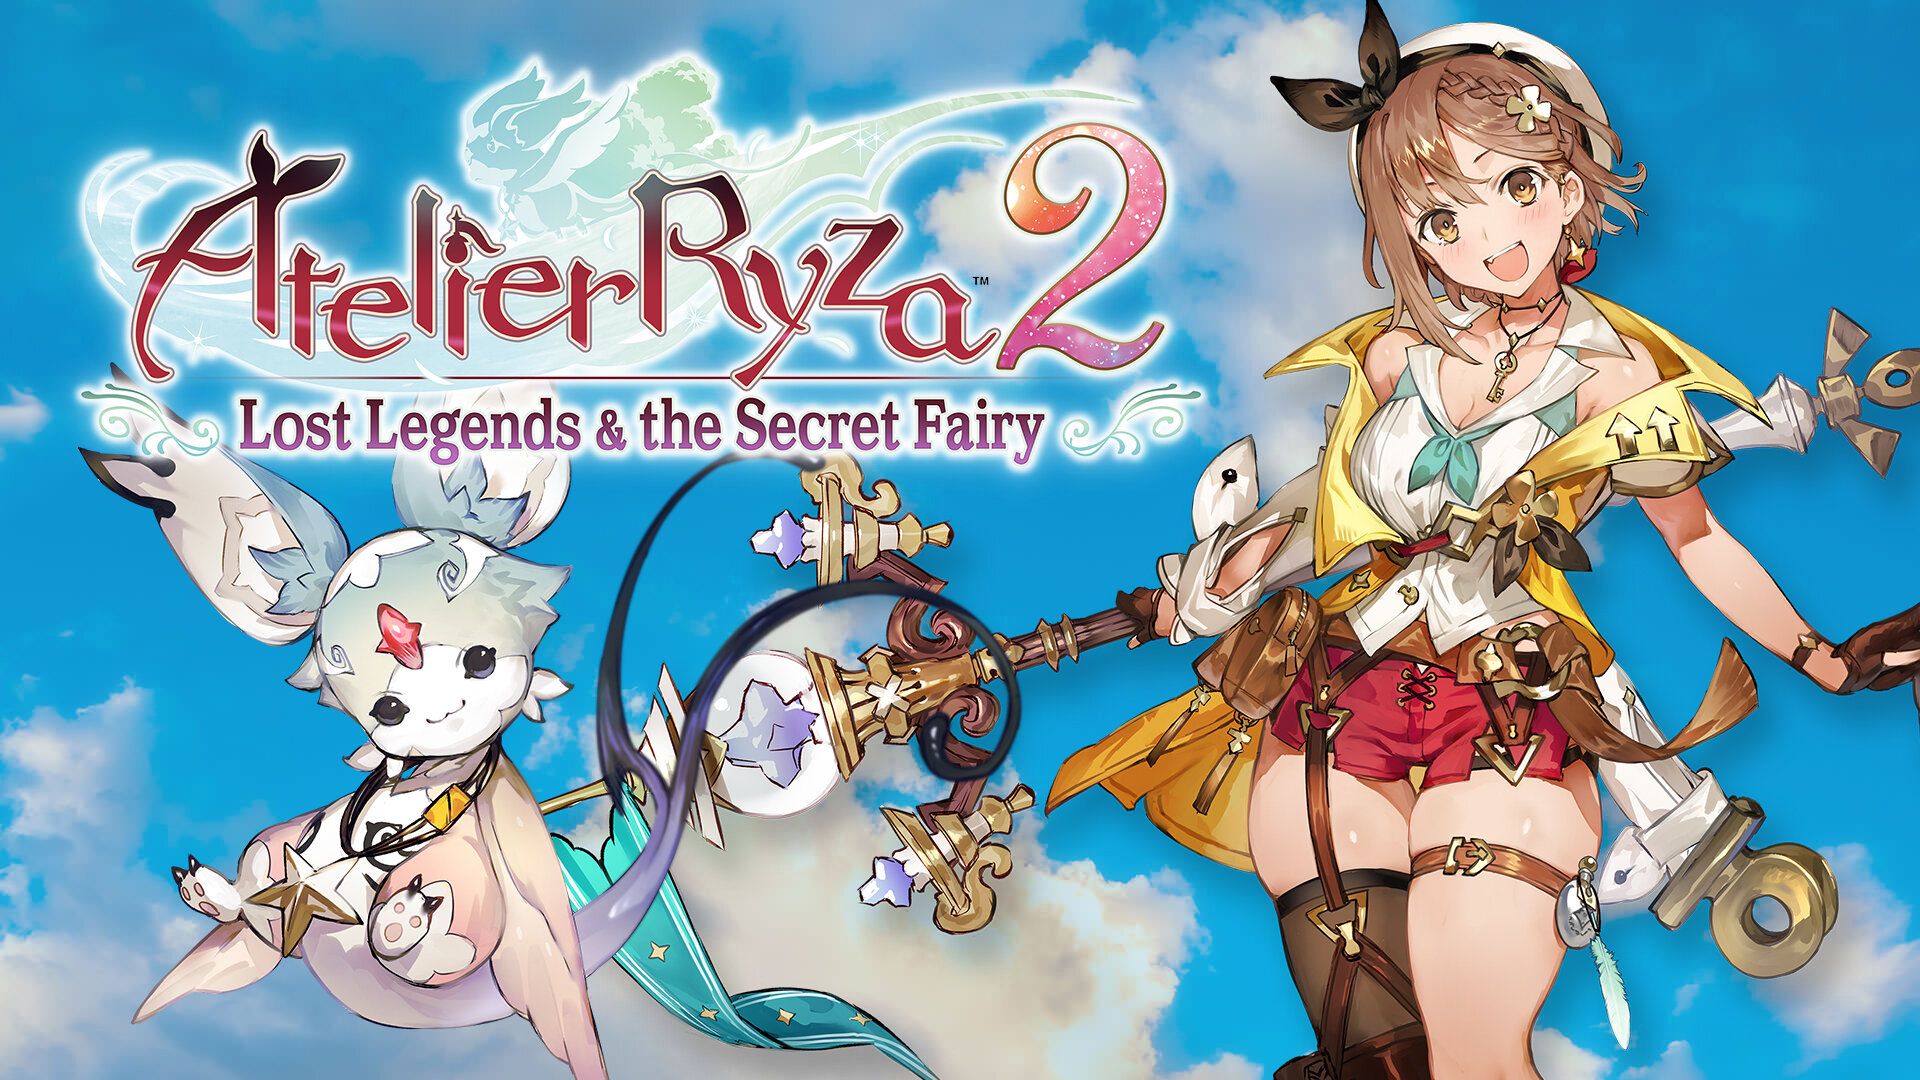 Atelier Ryza 2: Lost Legends & the Secret Fairy gets a proper reveal